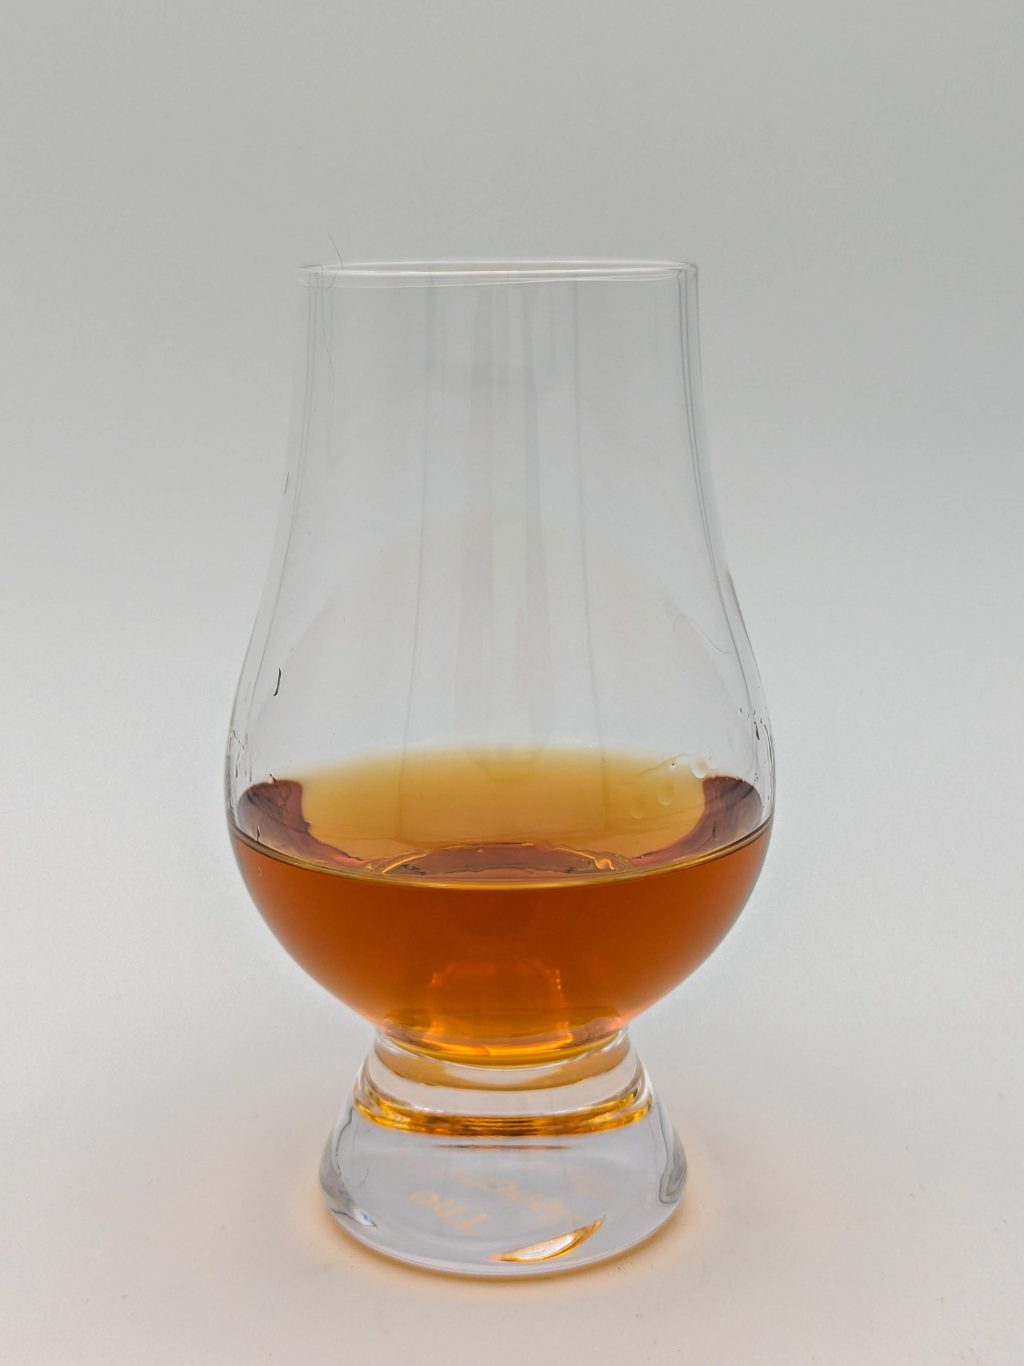 Amber liquid in a glencairn glass